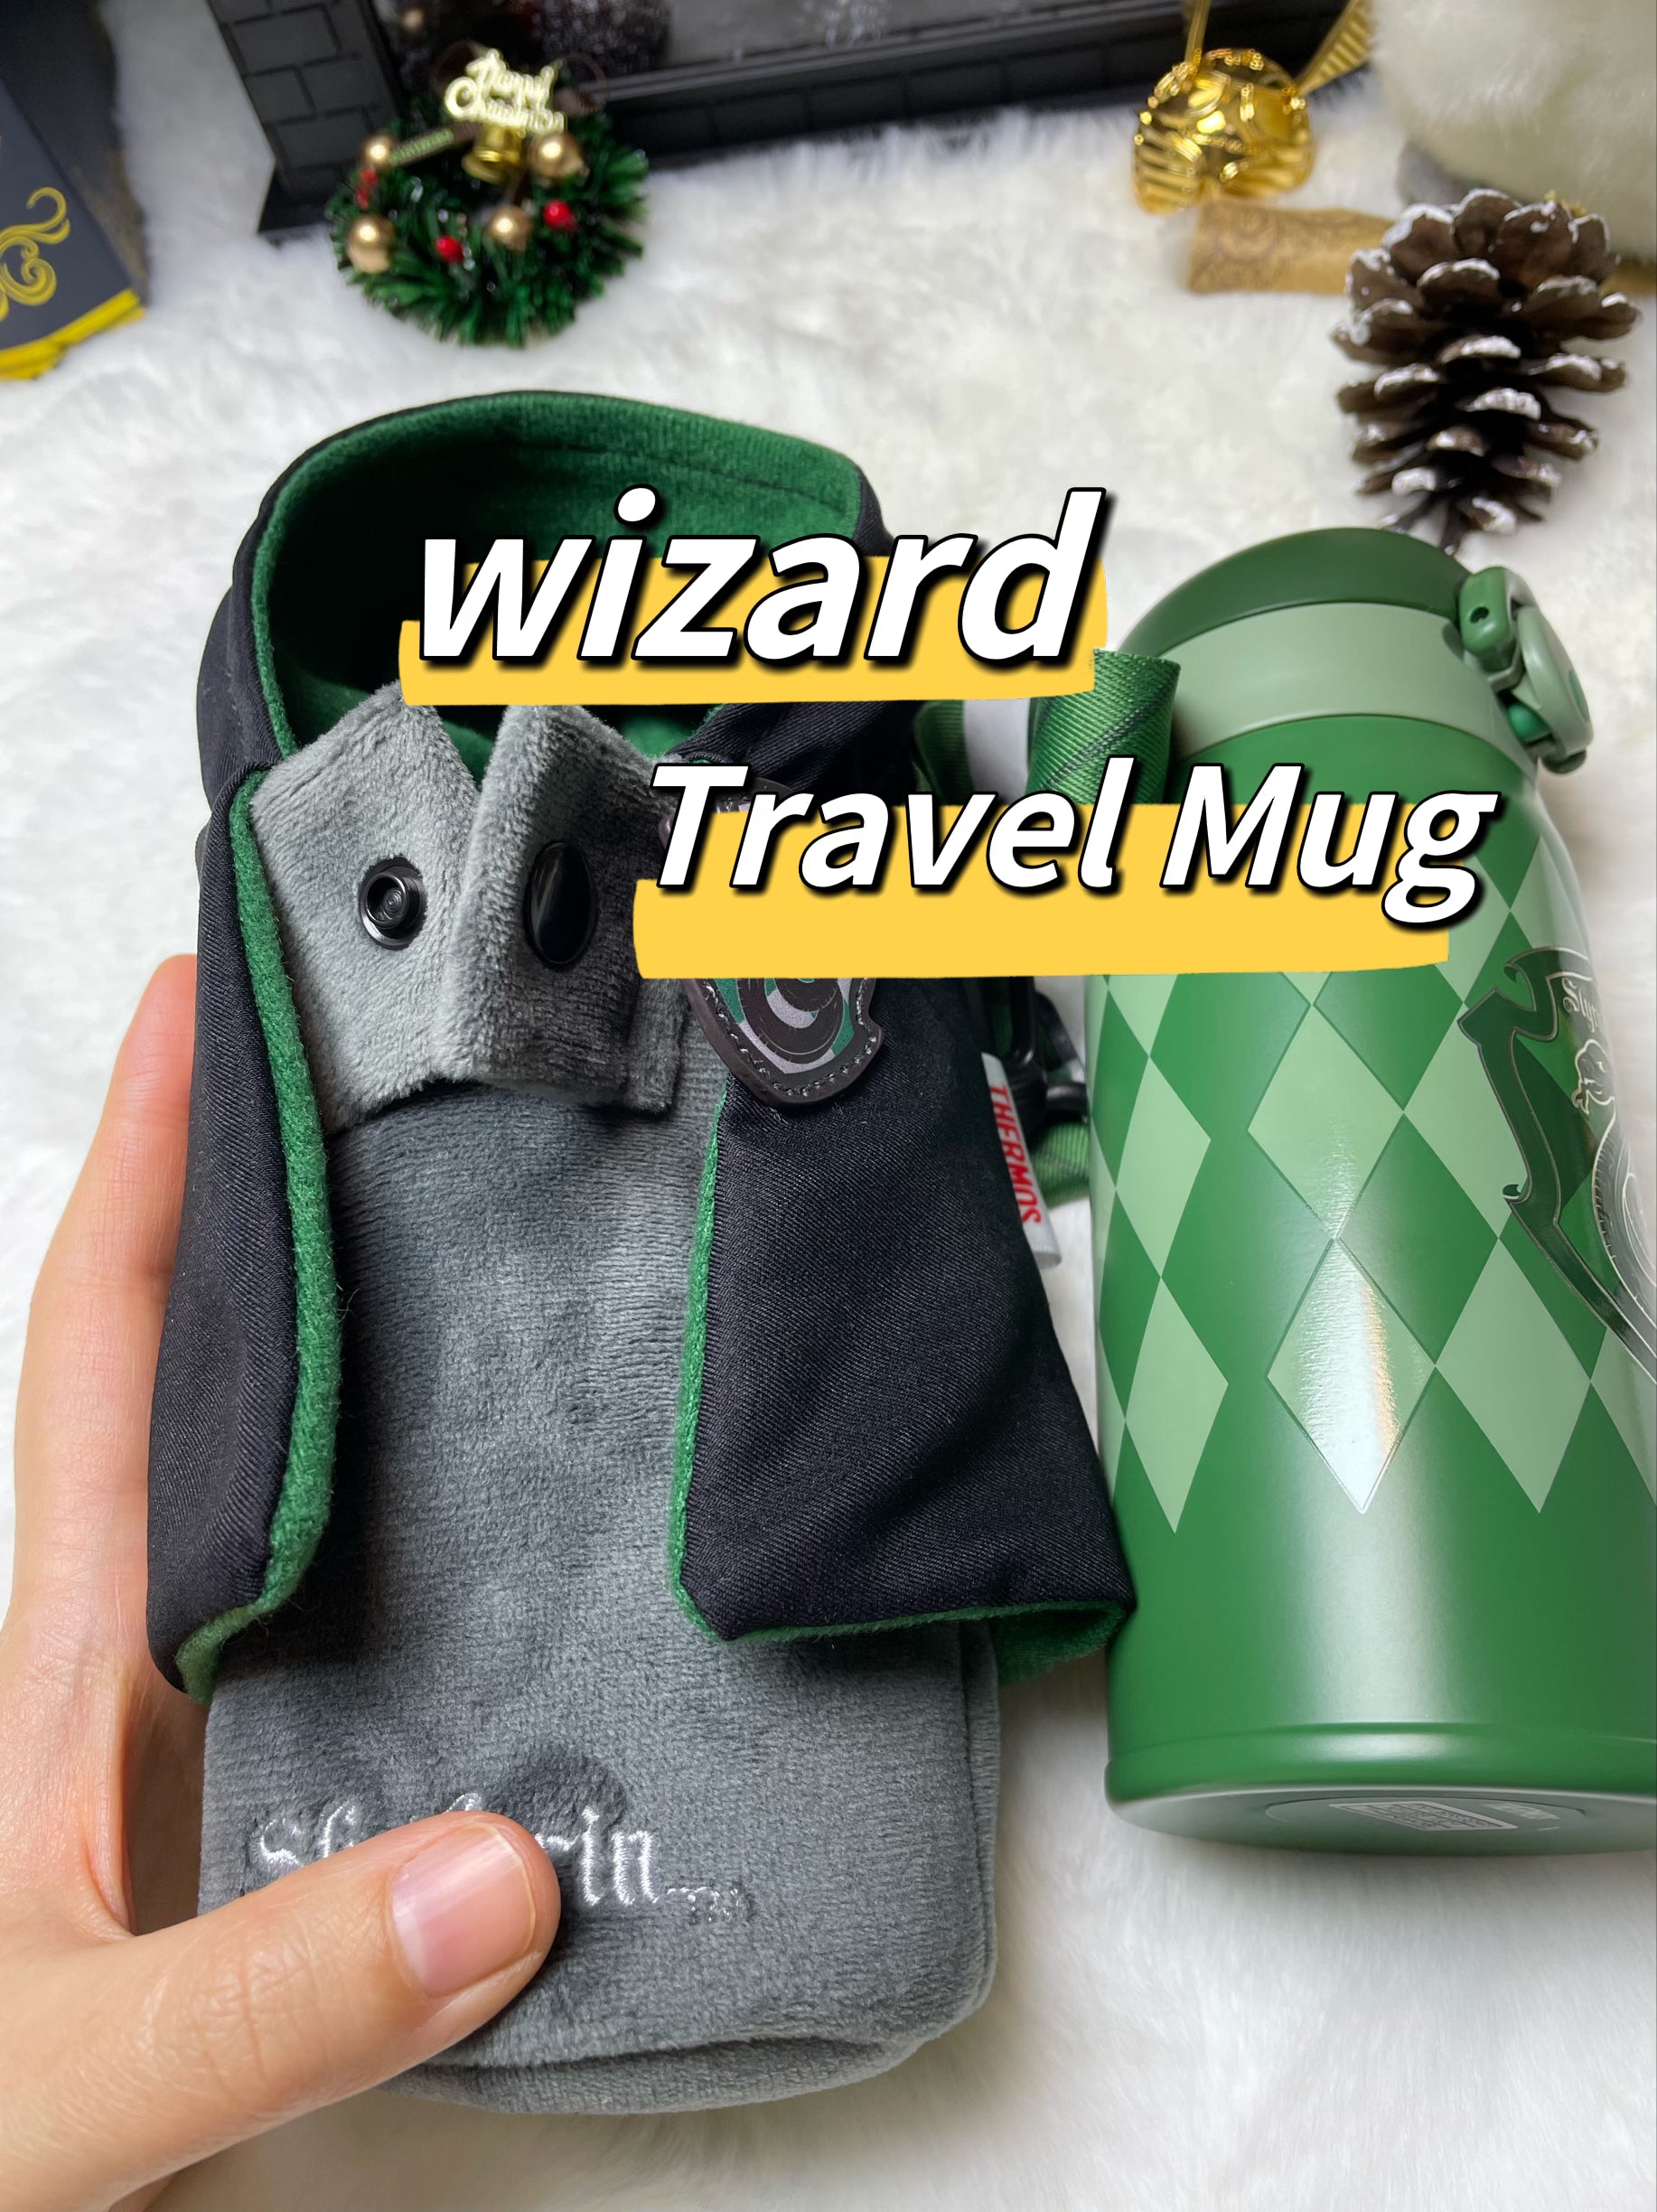 Wizard travel mug